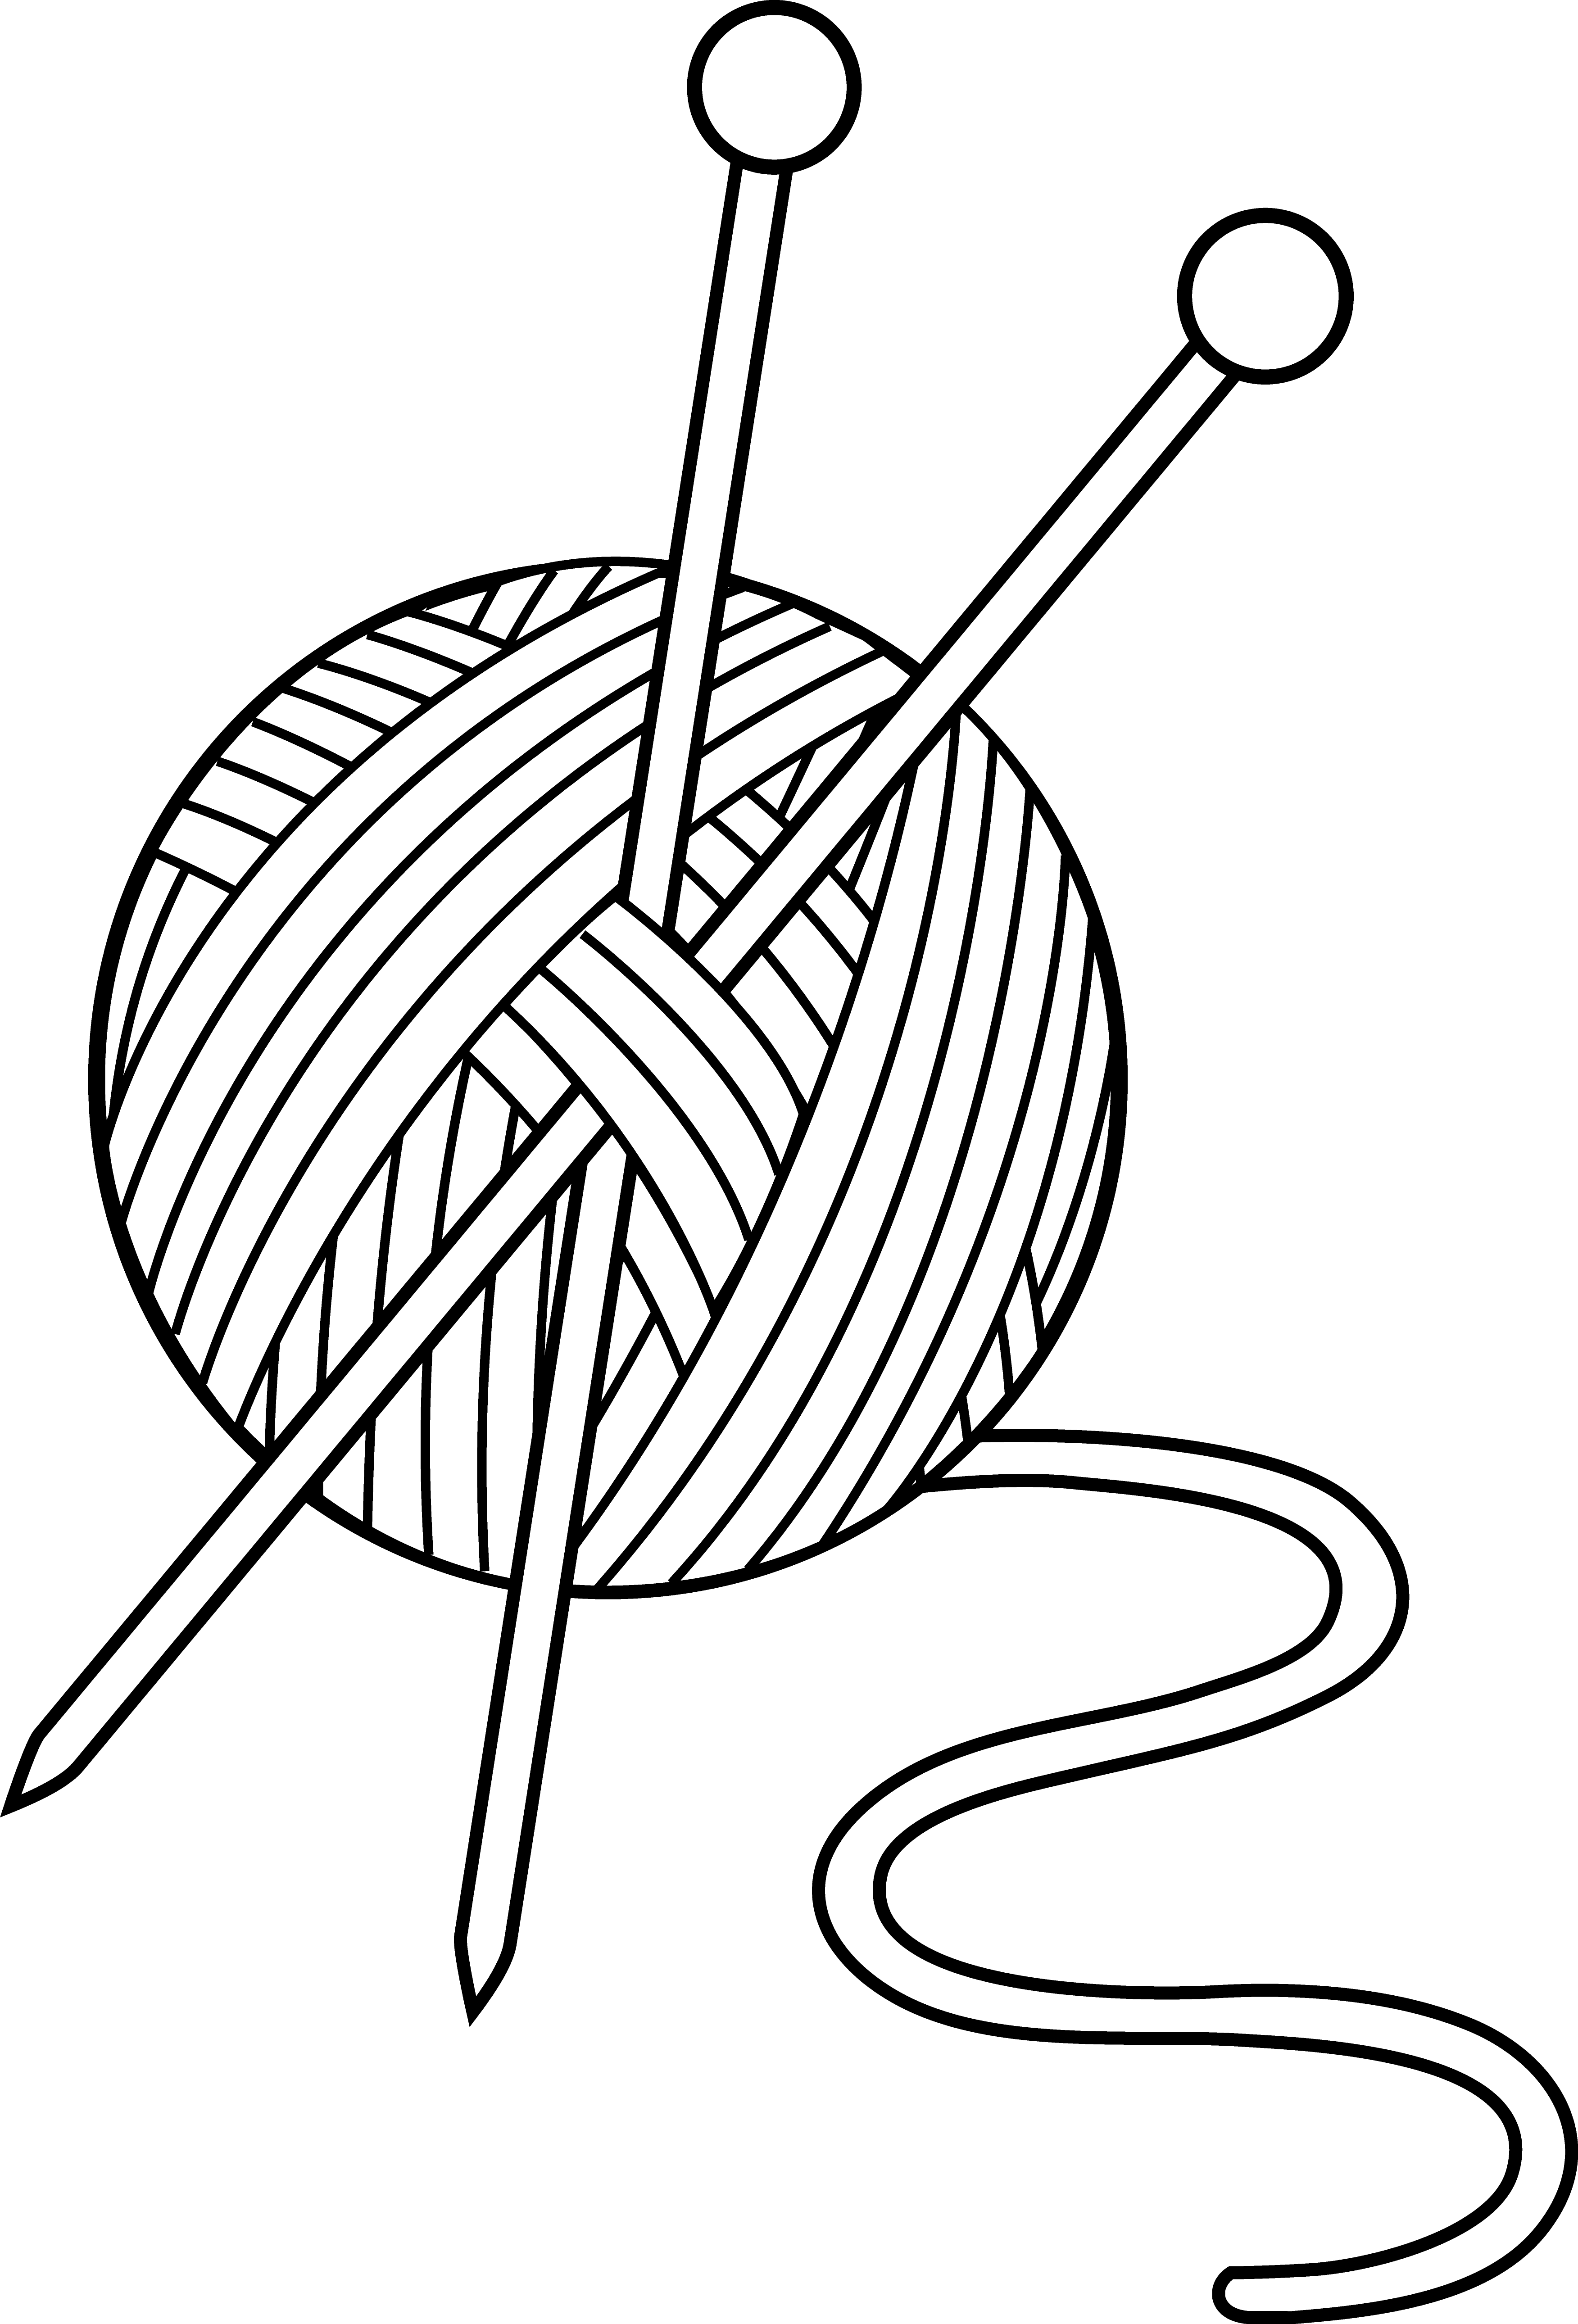 Yarn Balland Knitting Needles Outline